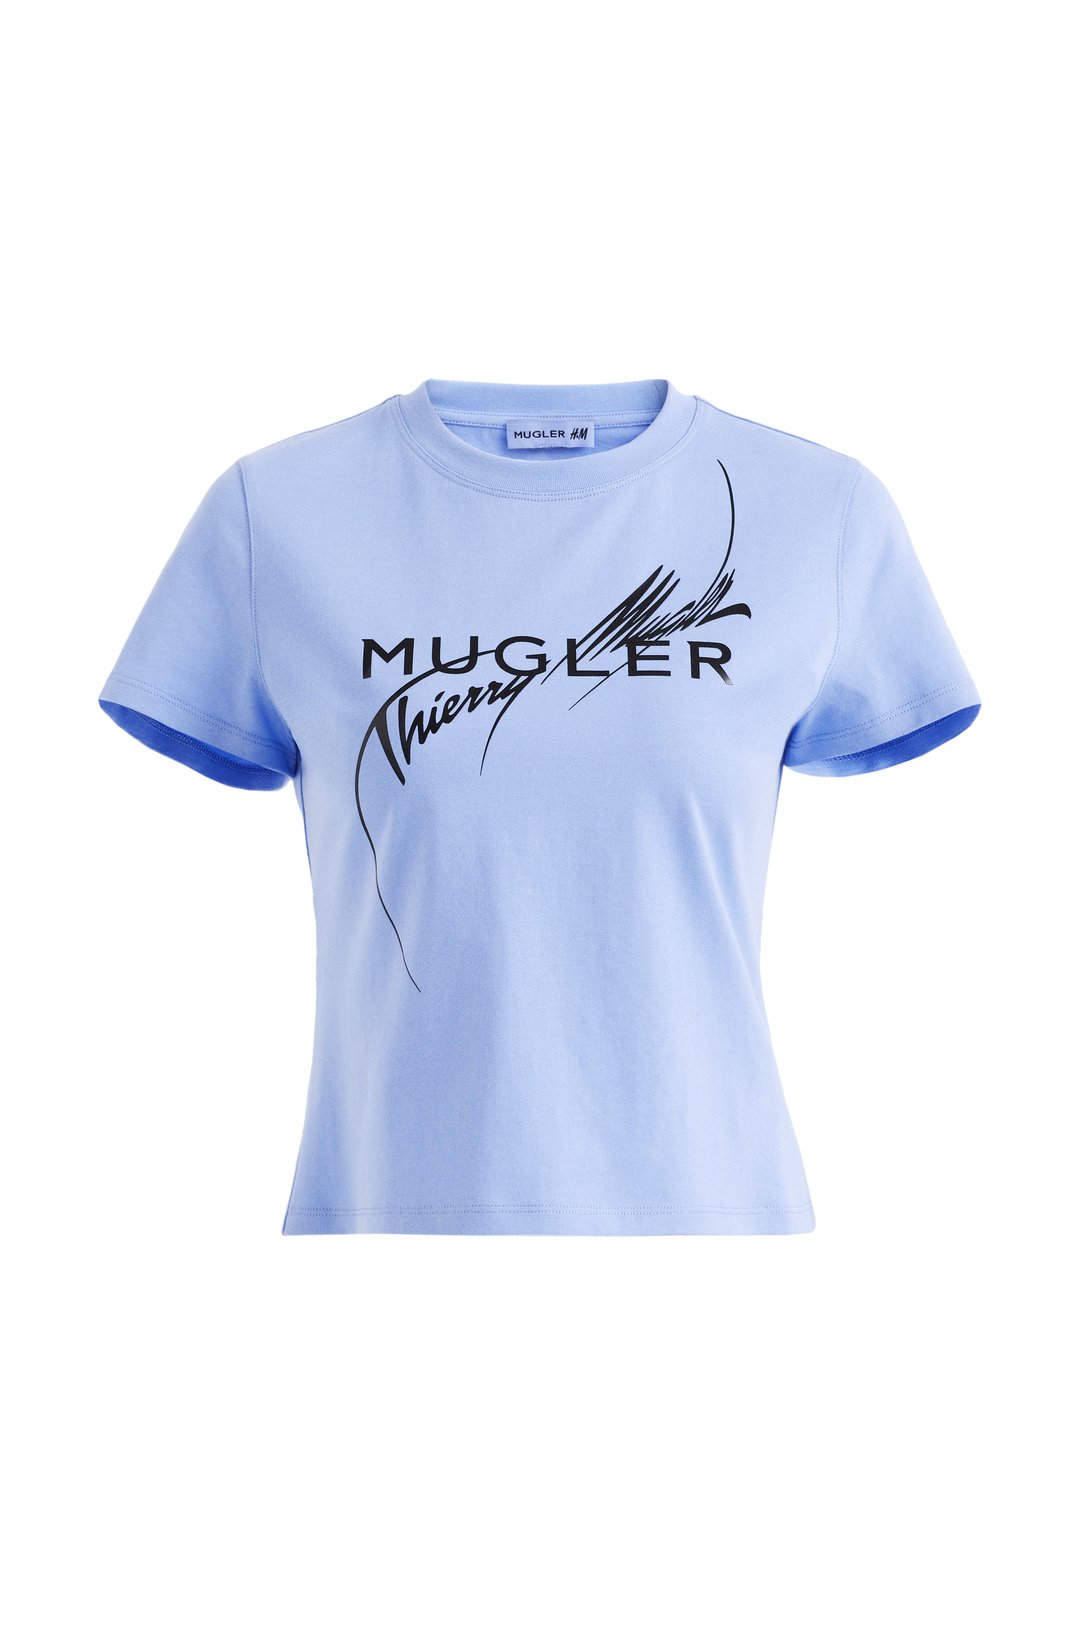 Mugler H&M セカンドスキングローブ ブラック abitur.gnesin-academy.ru